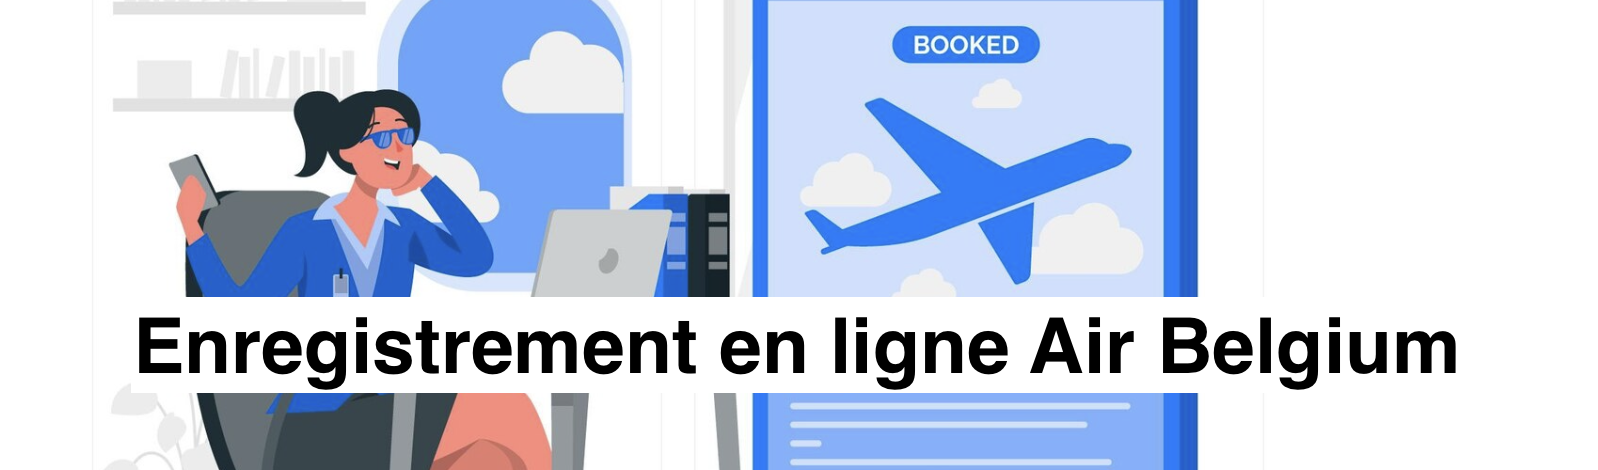 Enregistrement en ligne Air Belgium 